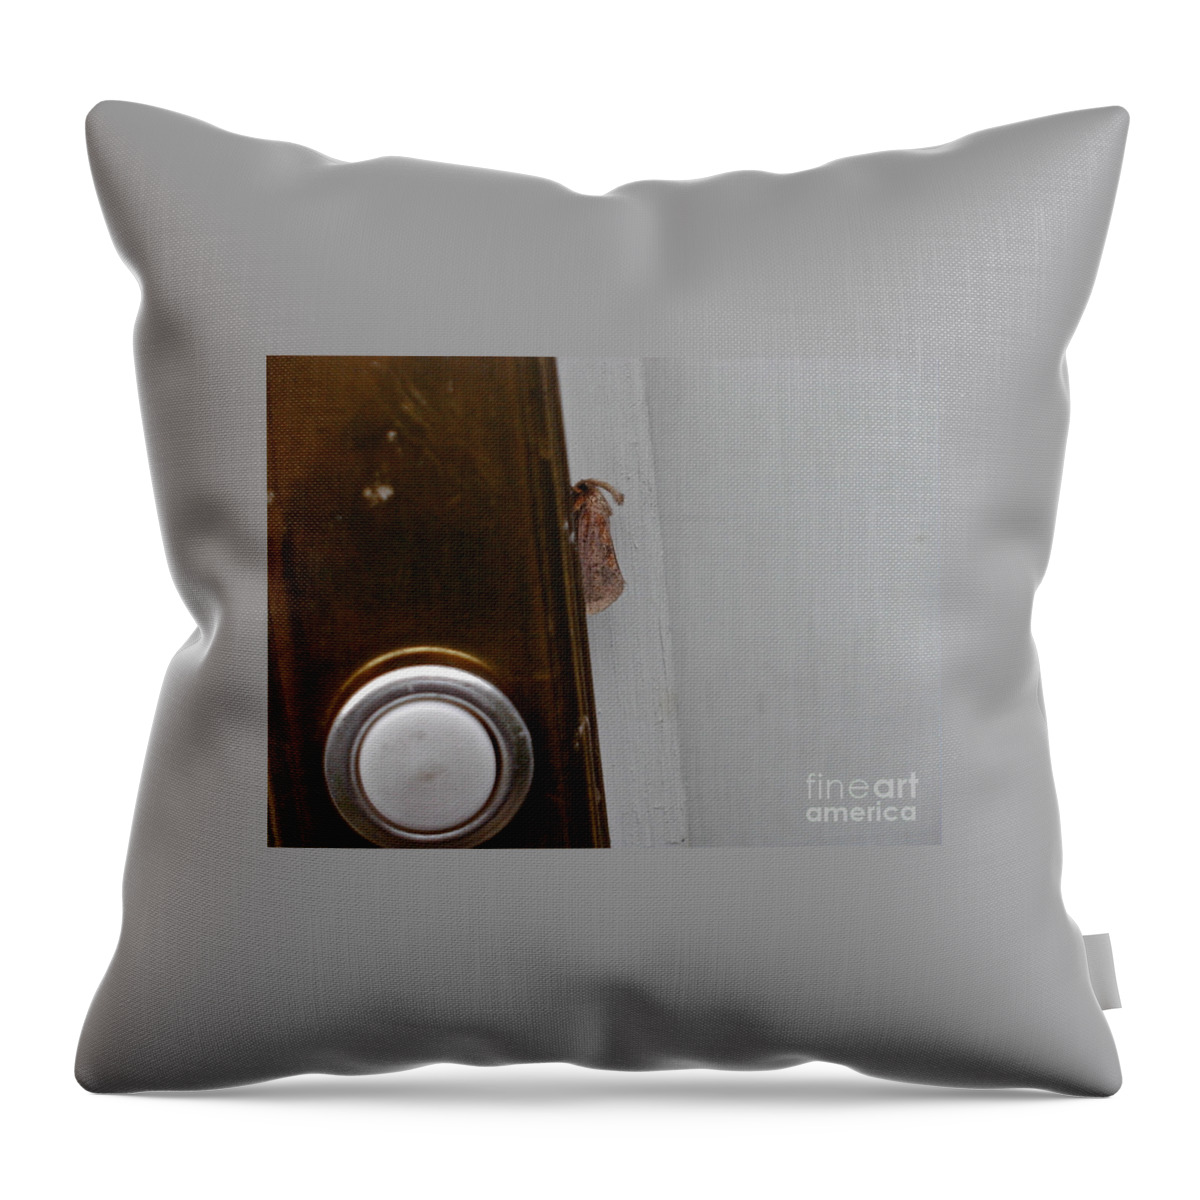 Moths Throw Pillow featuring the photograph Tiny Doorbell Moth by Christopher Plummer